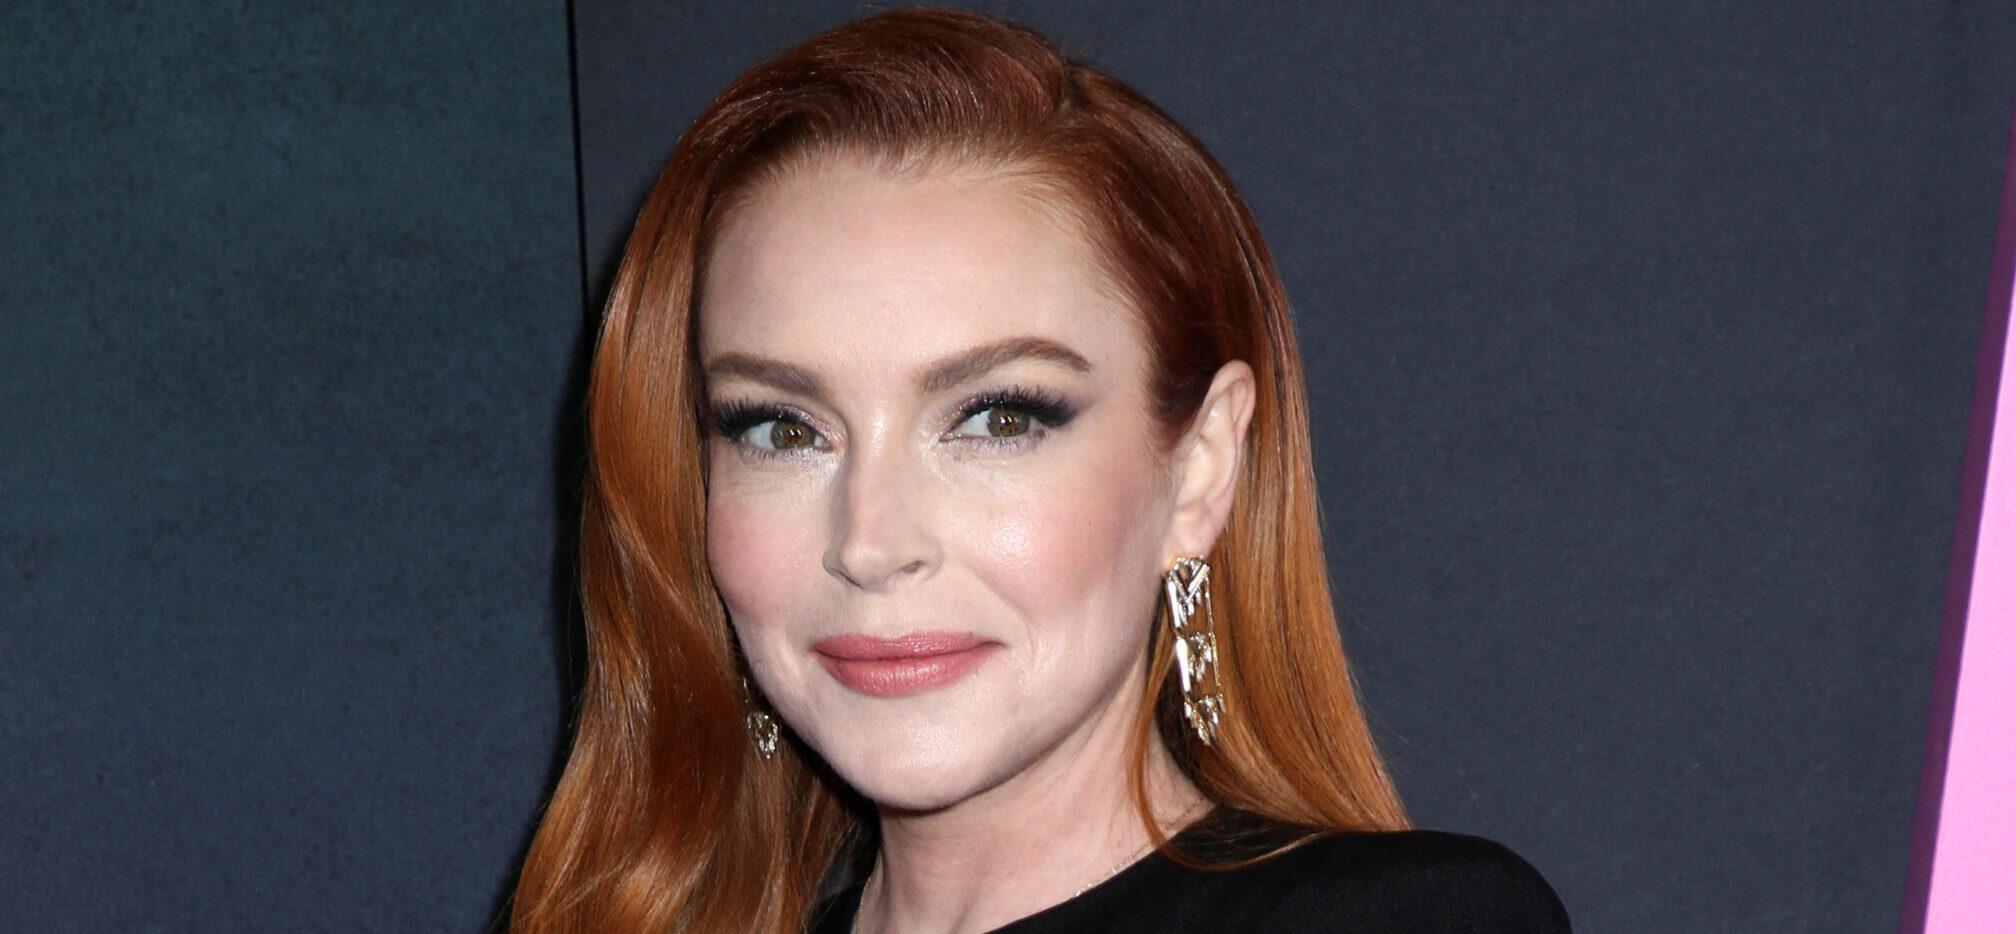 Lindsay Lohan Upset Over ‘Mean Girls’ Joke Referencing Her Private Parts